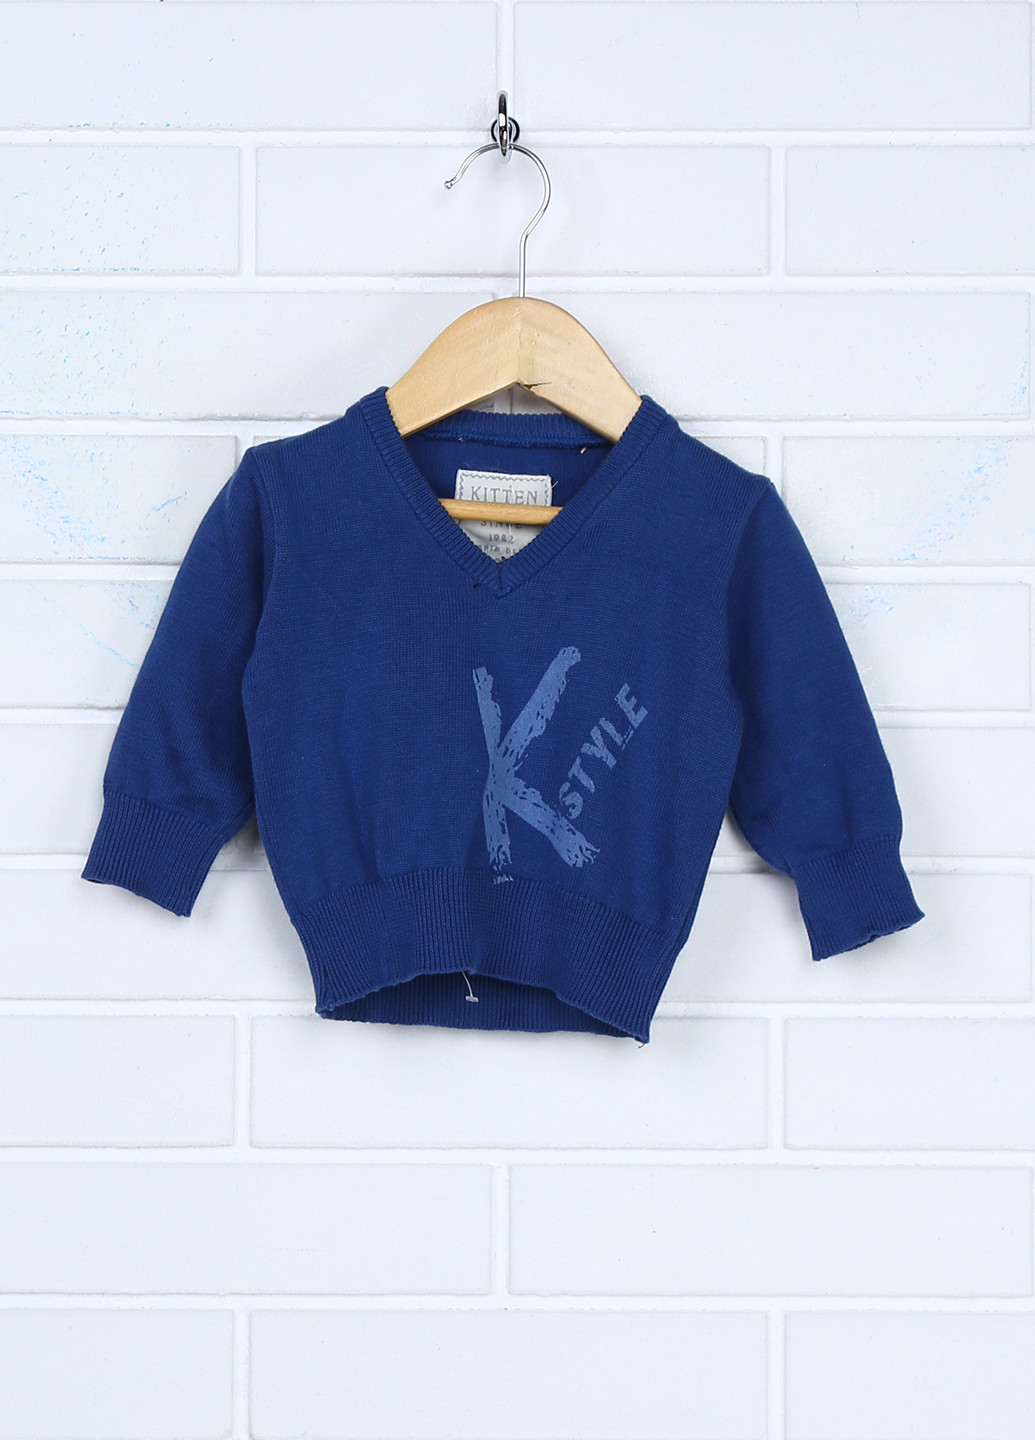 Синий демисезонный пуловер пуловер Kitten